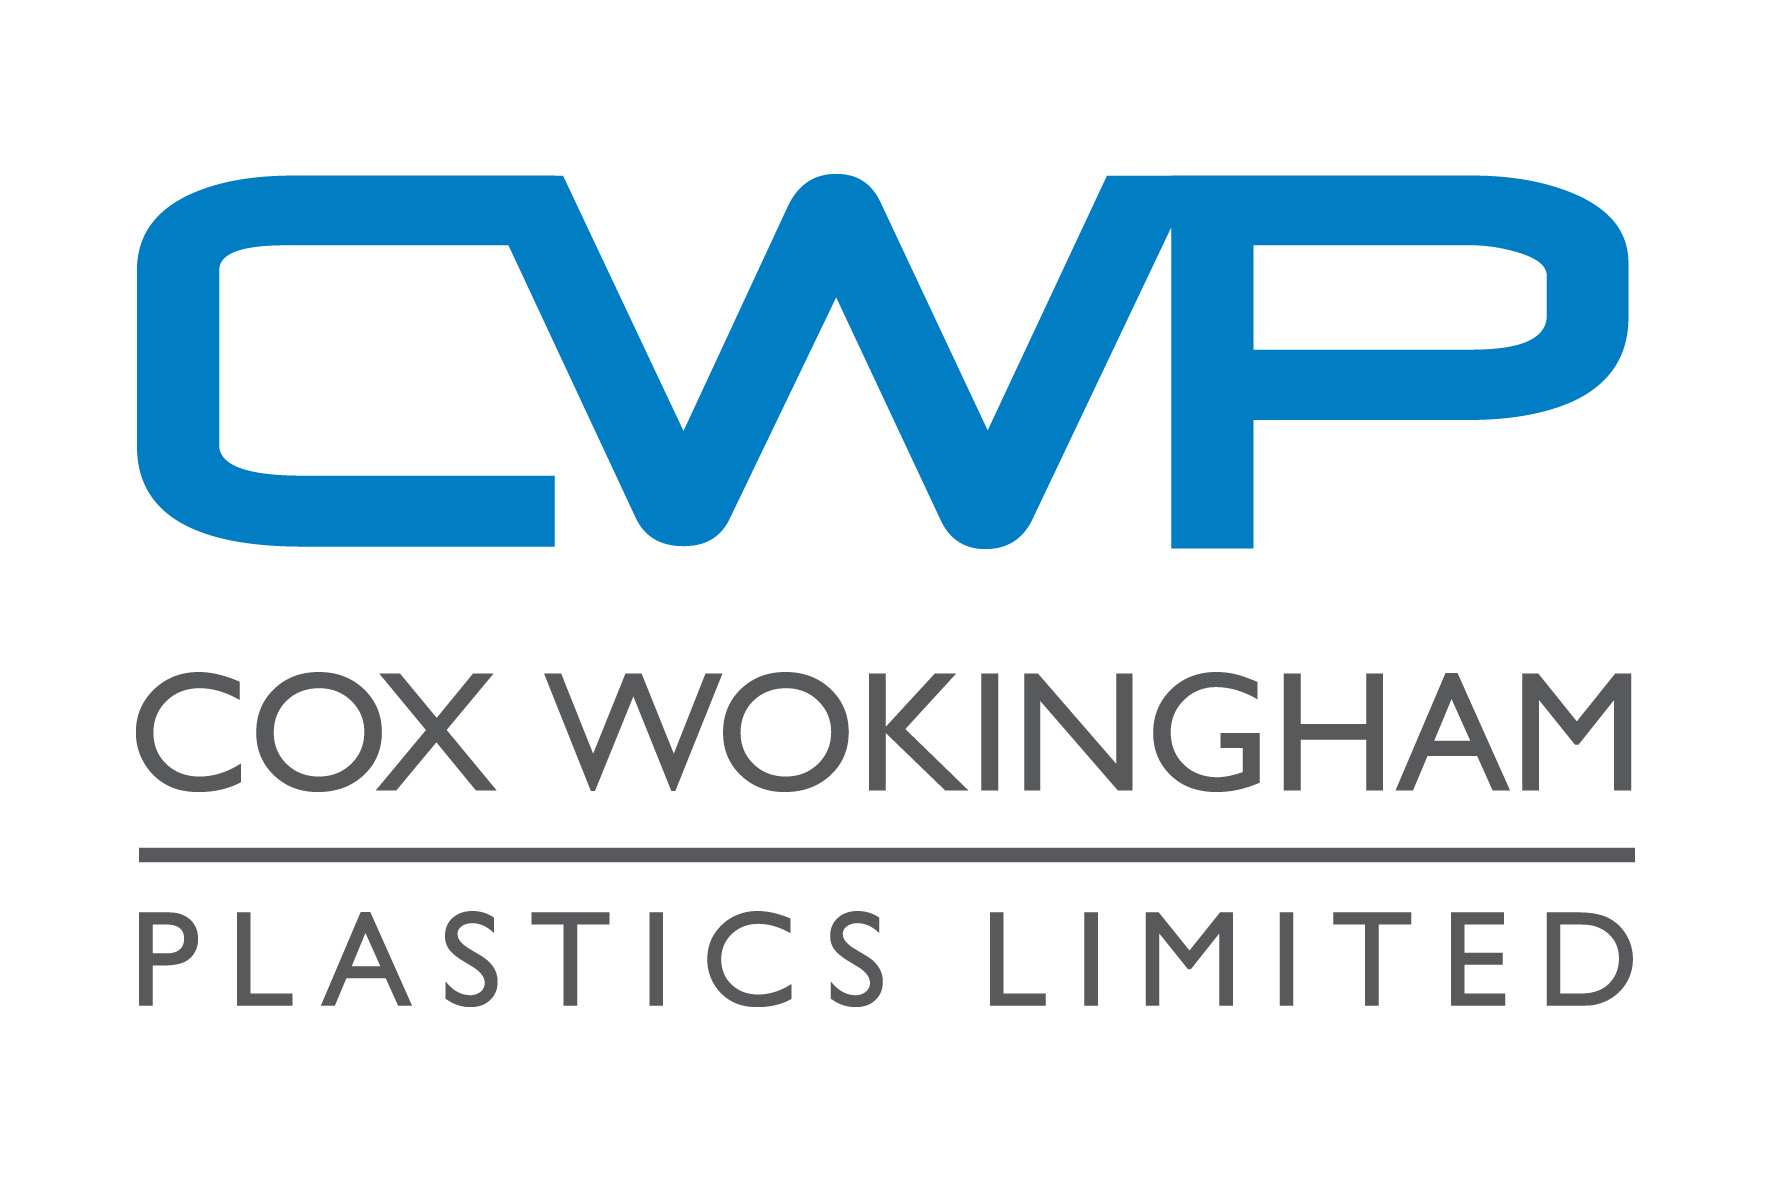 Cox Wokingham Plastics Limited